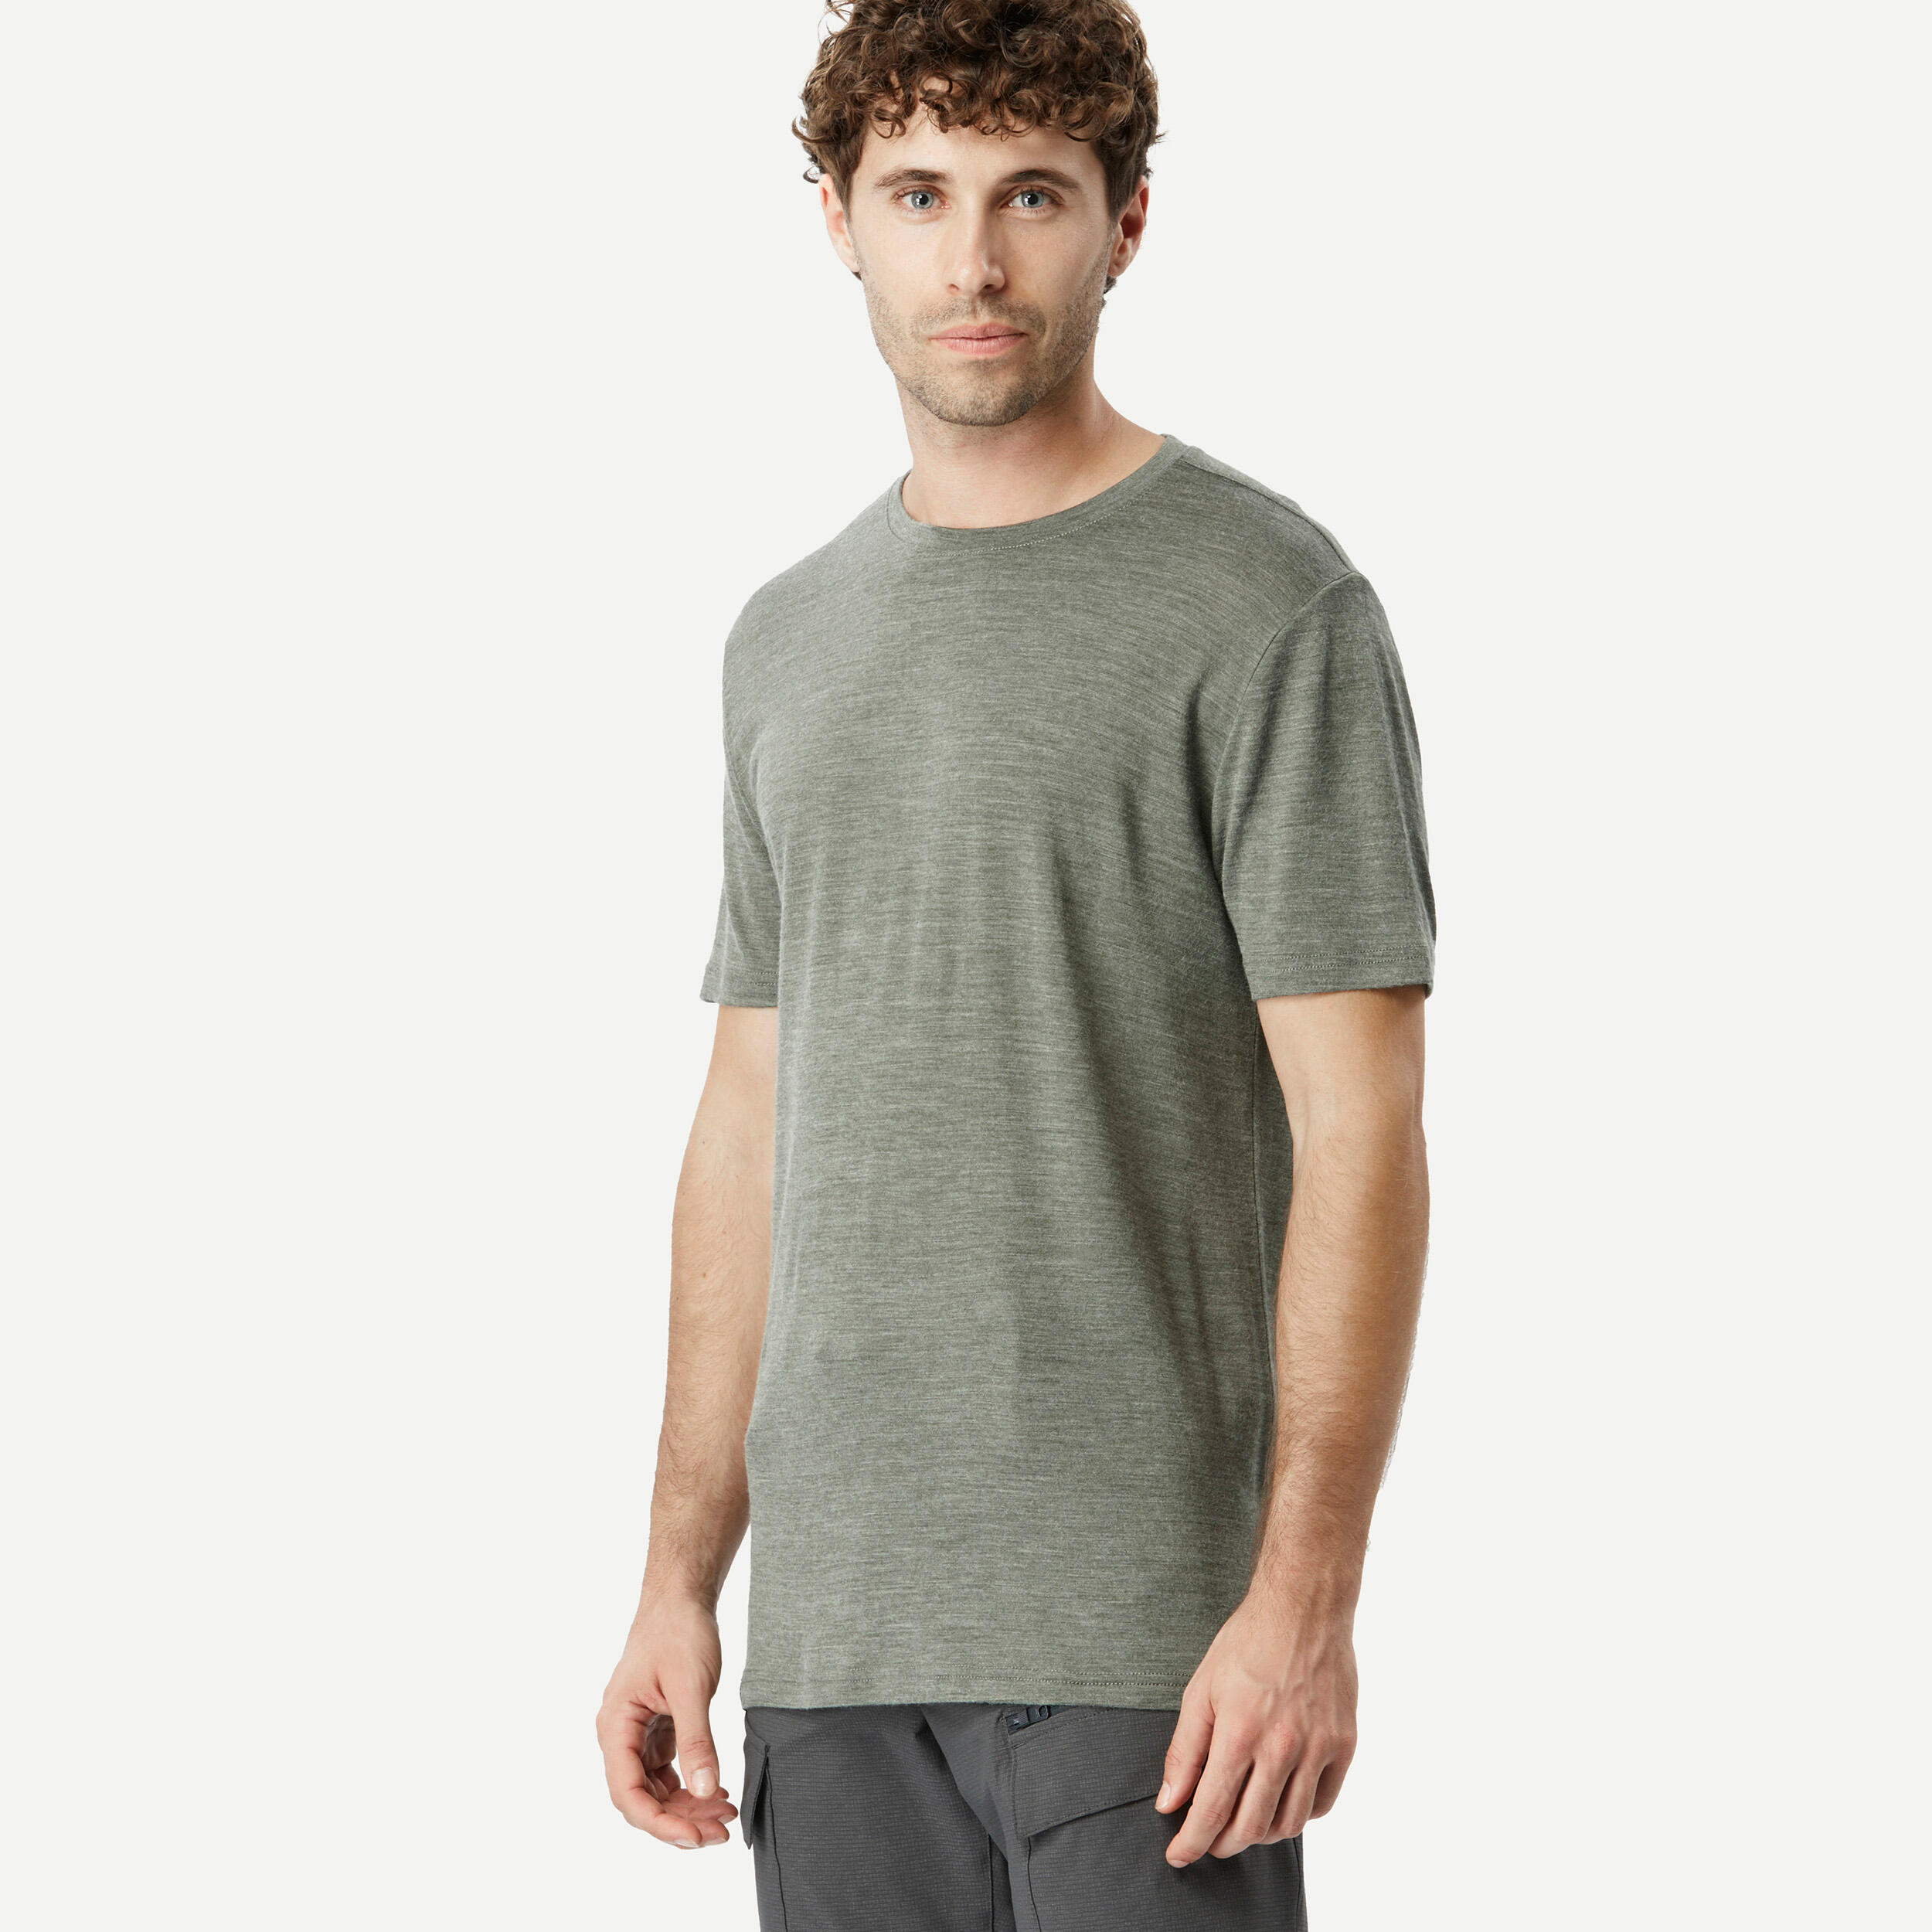 Men’s short-sleeved Merino wool hiking travel t-shirt - TRAVEL 500 khaki 1/6